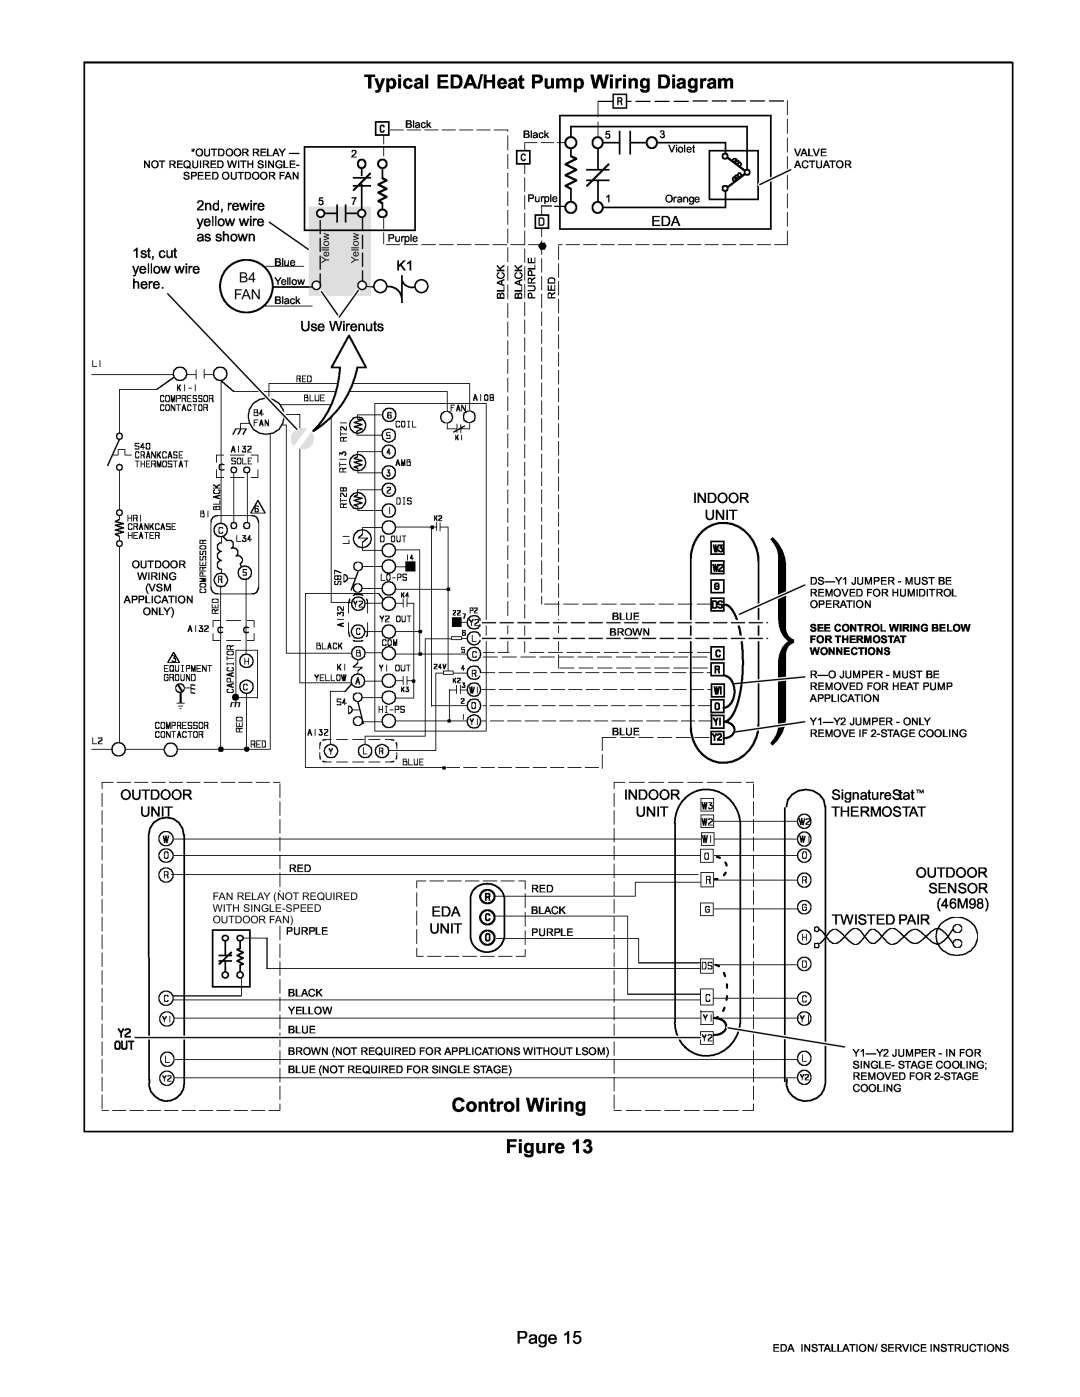 Lennox International Inc 021, 505 installation instructions Typical EDA/Heat Pump Wiring Diagram, Control Wiring Figure 